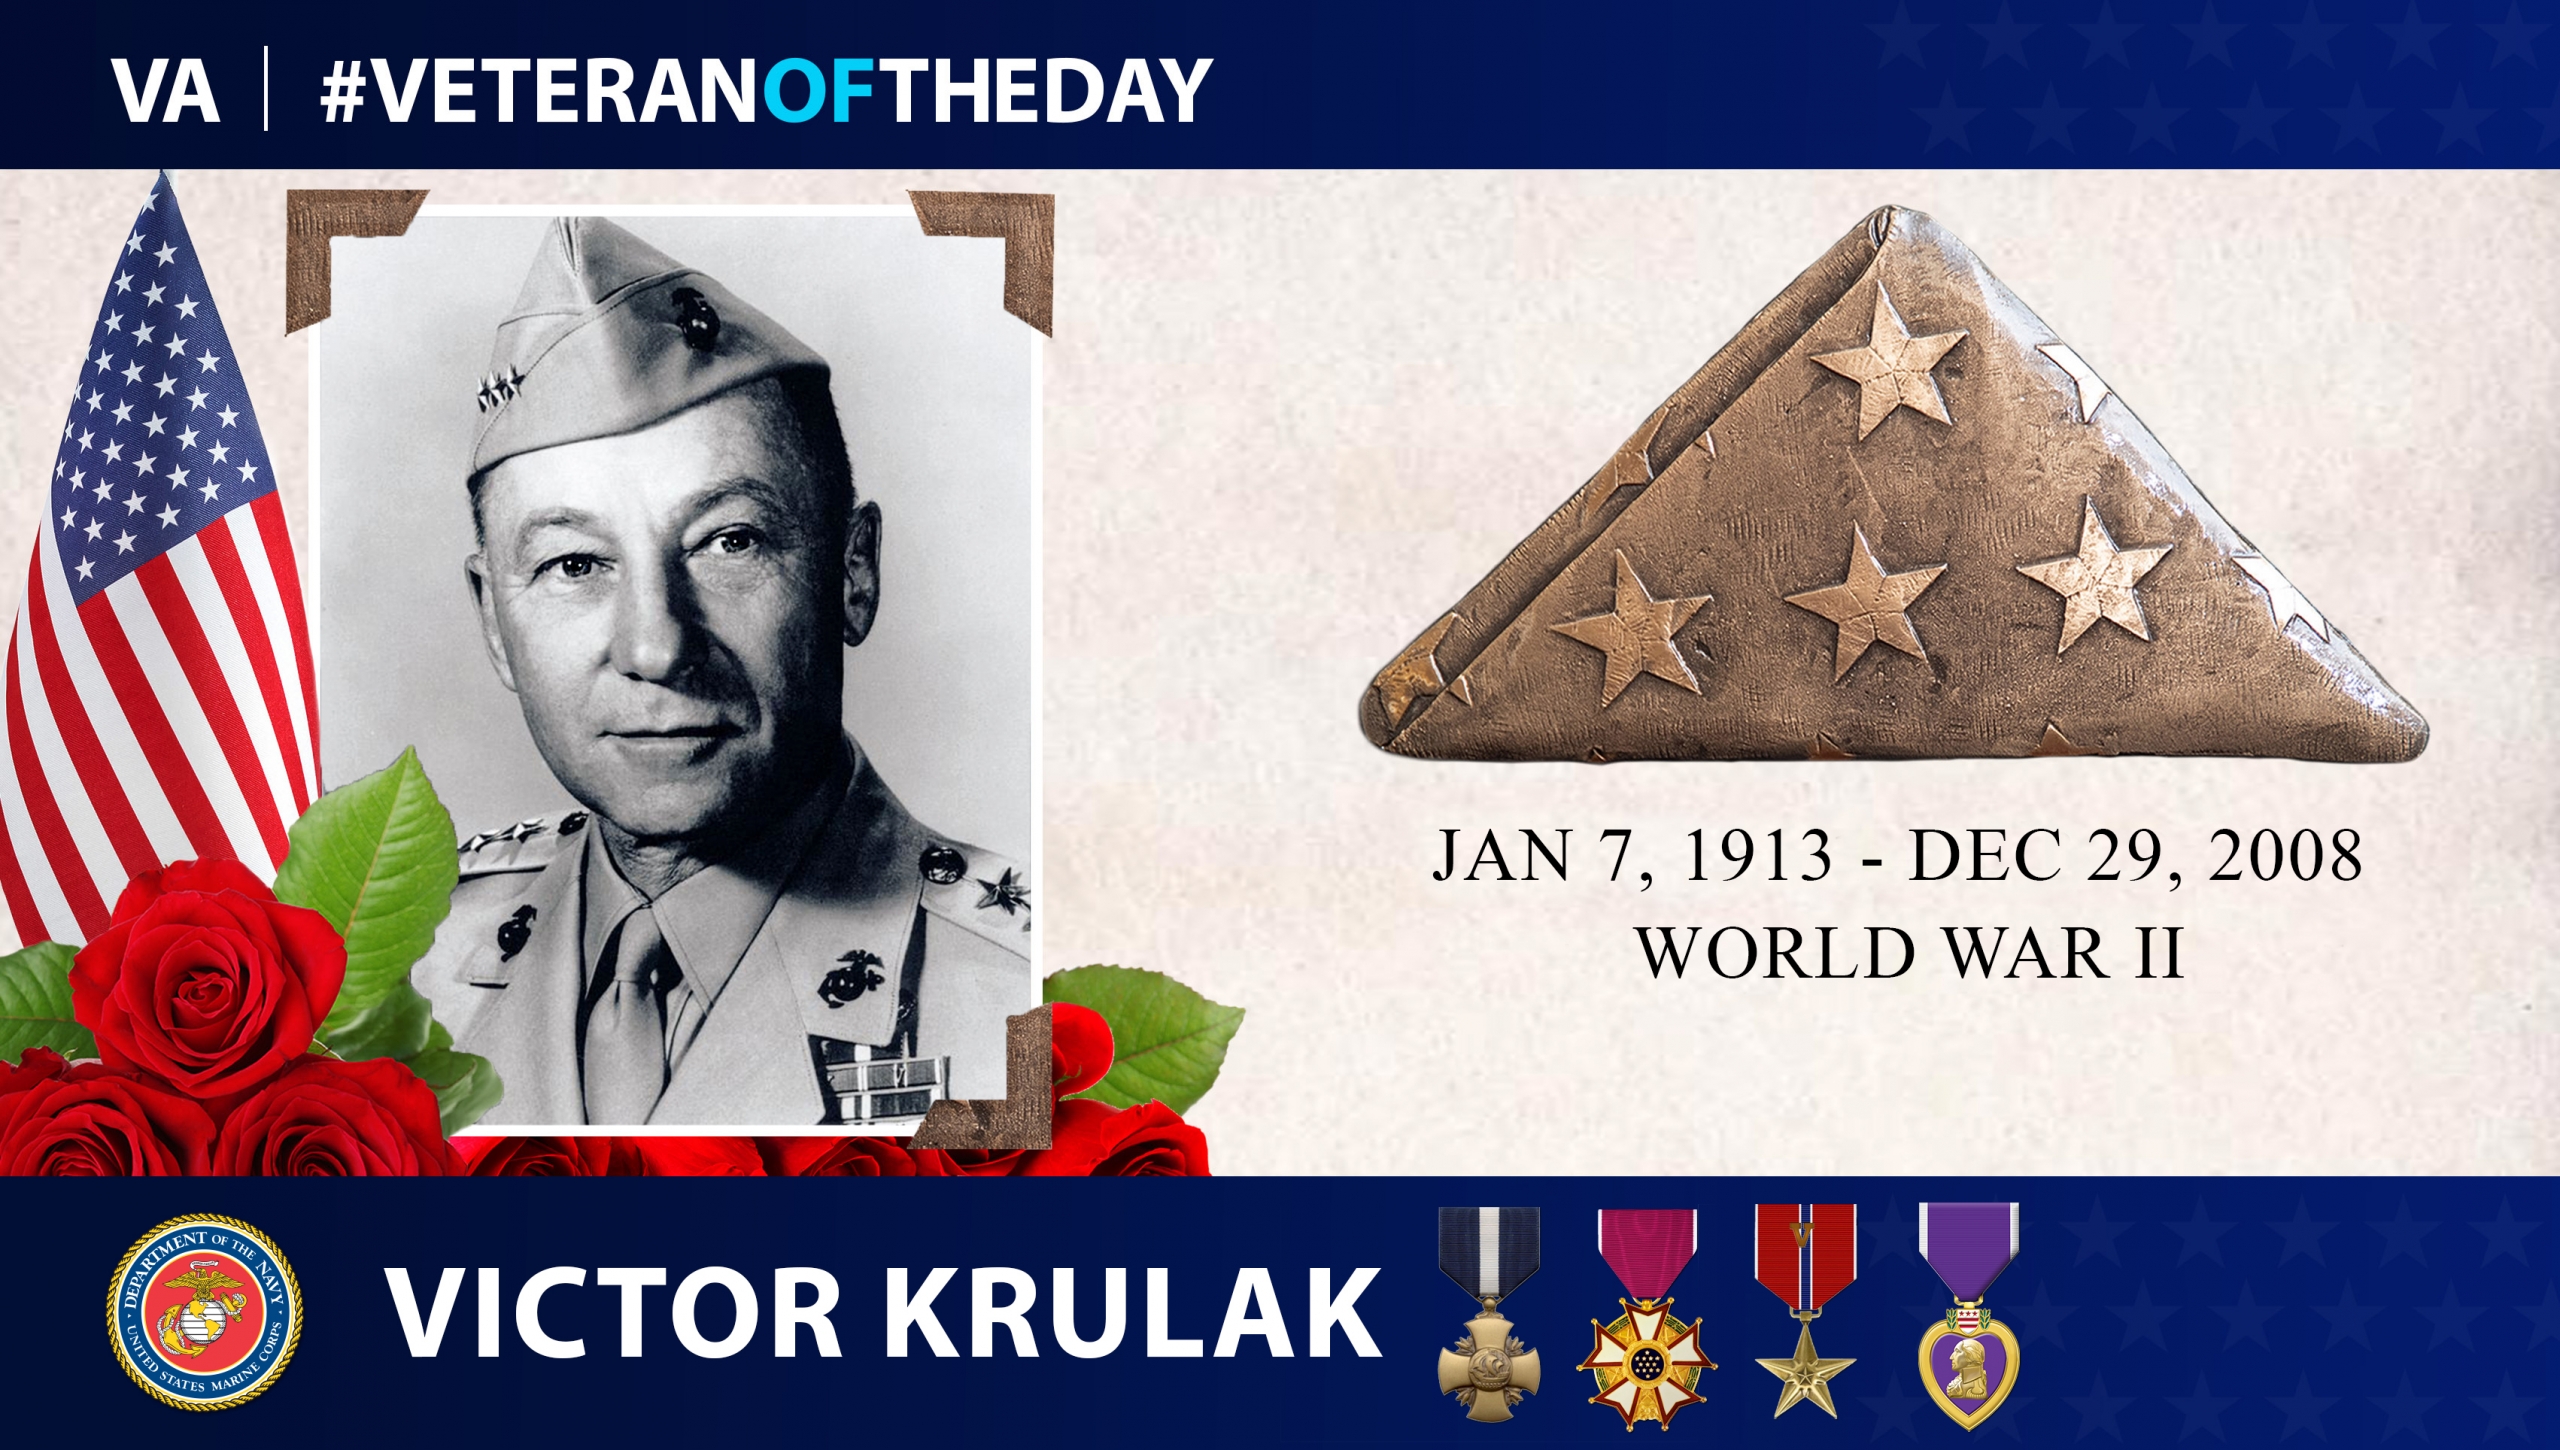 Marine Corps Veteran Victor “Brute” Harold Krulak is today’s Veteran of the Day.